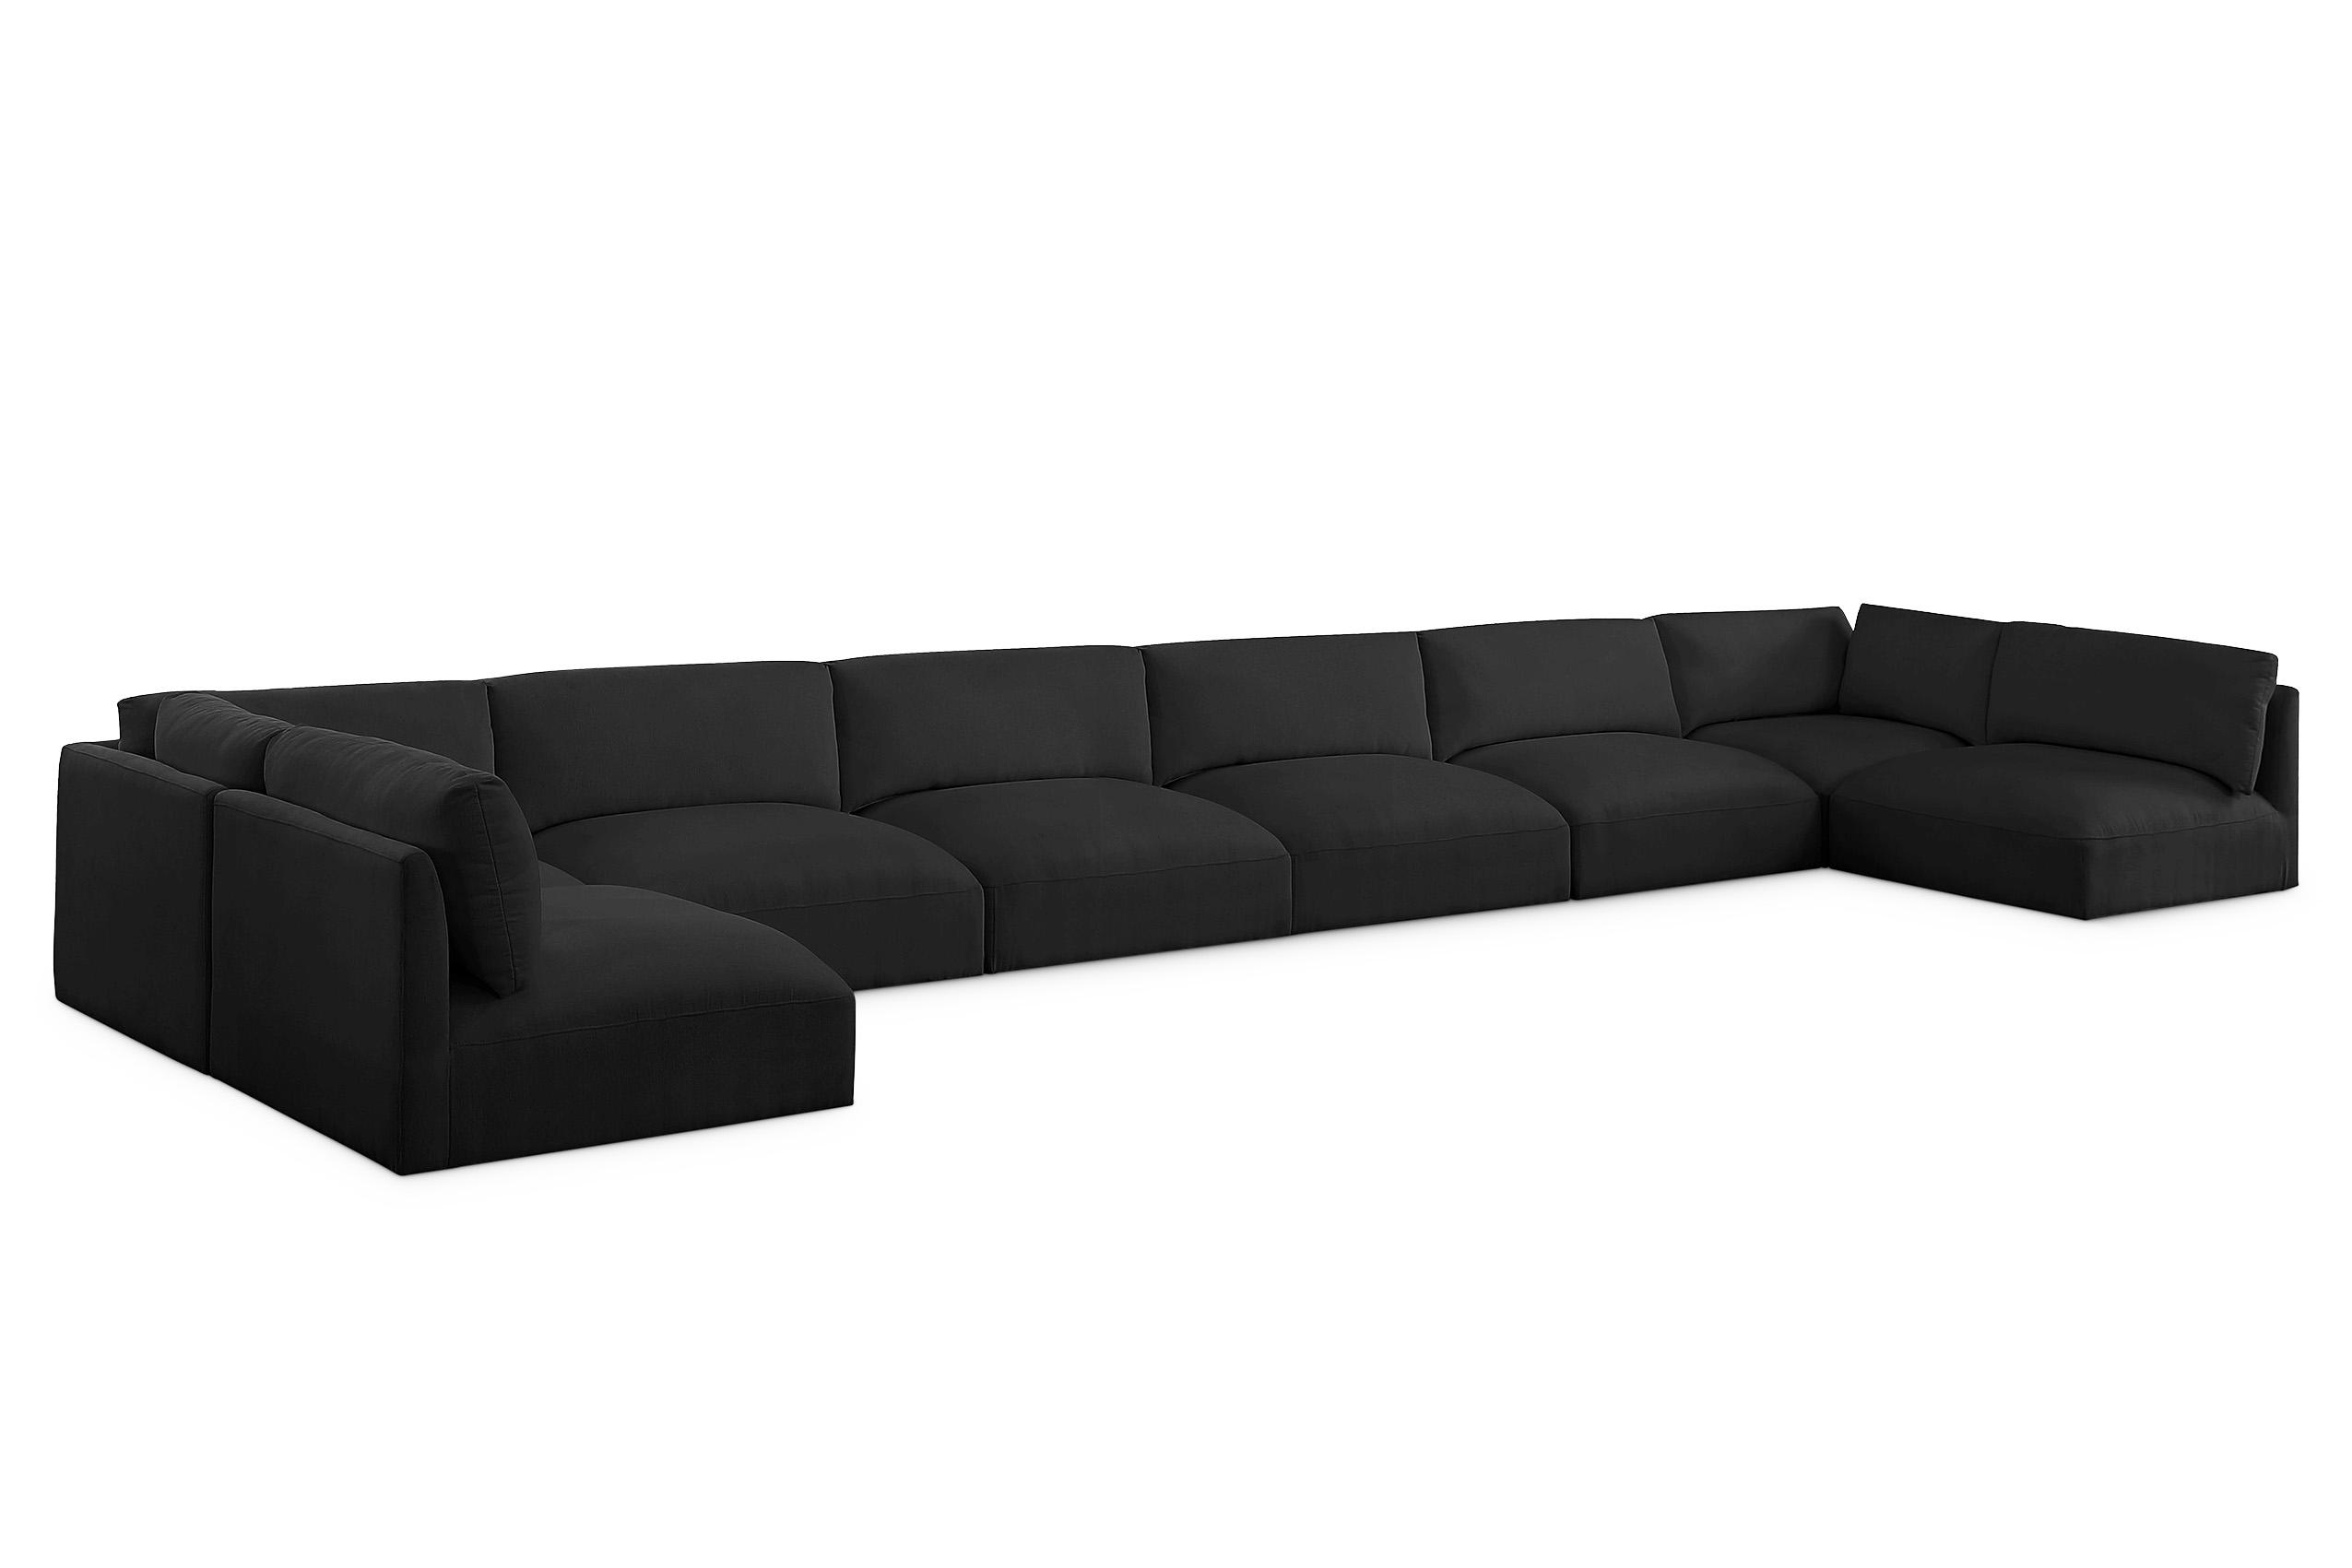 Contemporary, Modern Modular Sectional Sofa EASE 696Black-Sec8B 696Black-Sec8B in Black Fabric